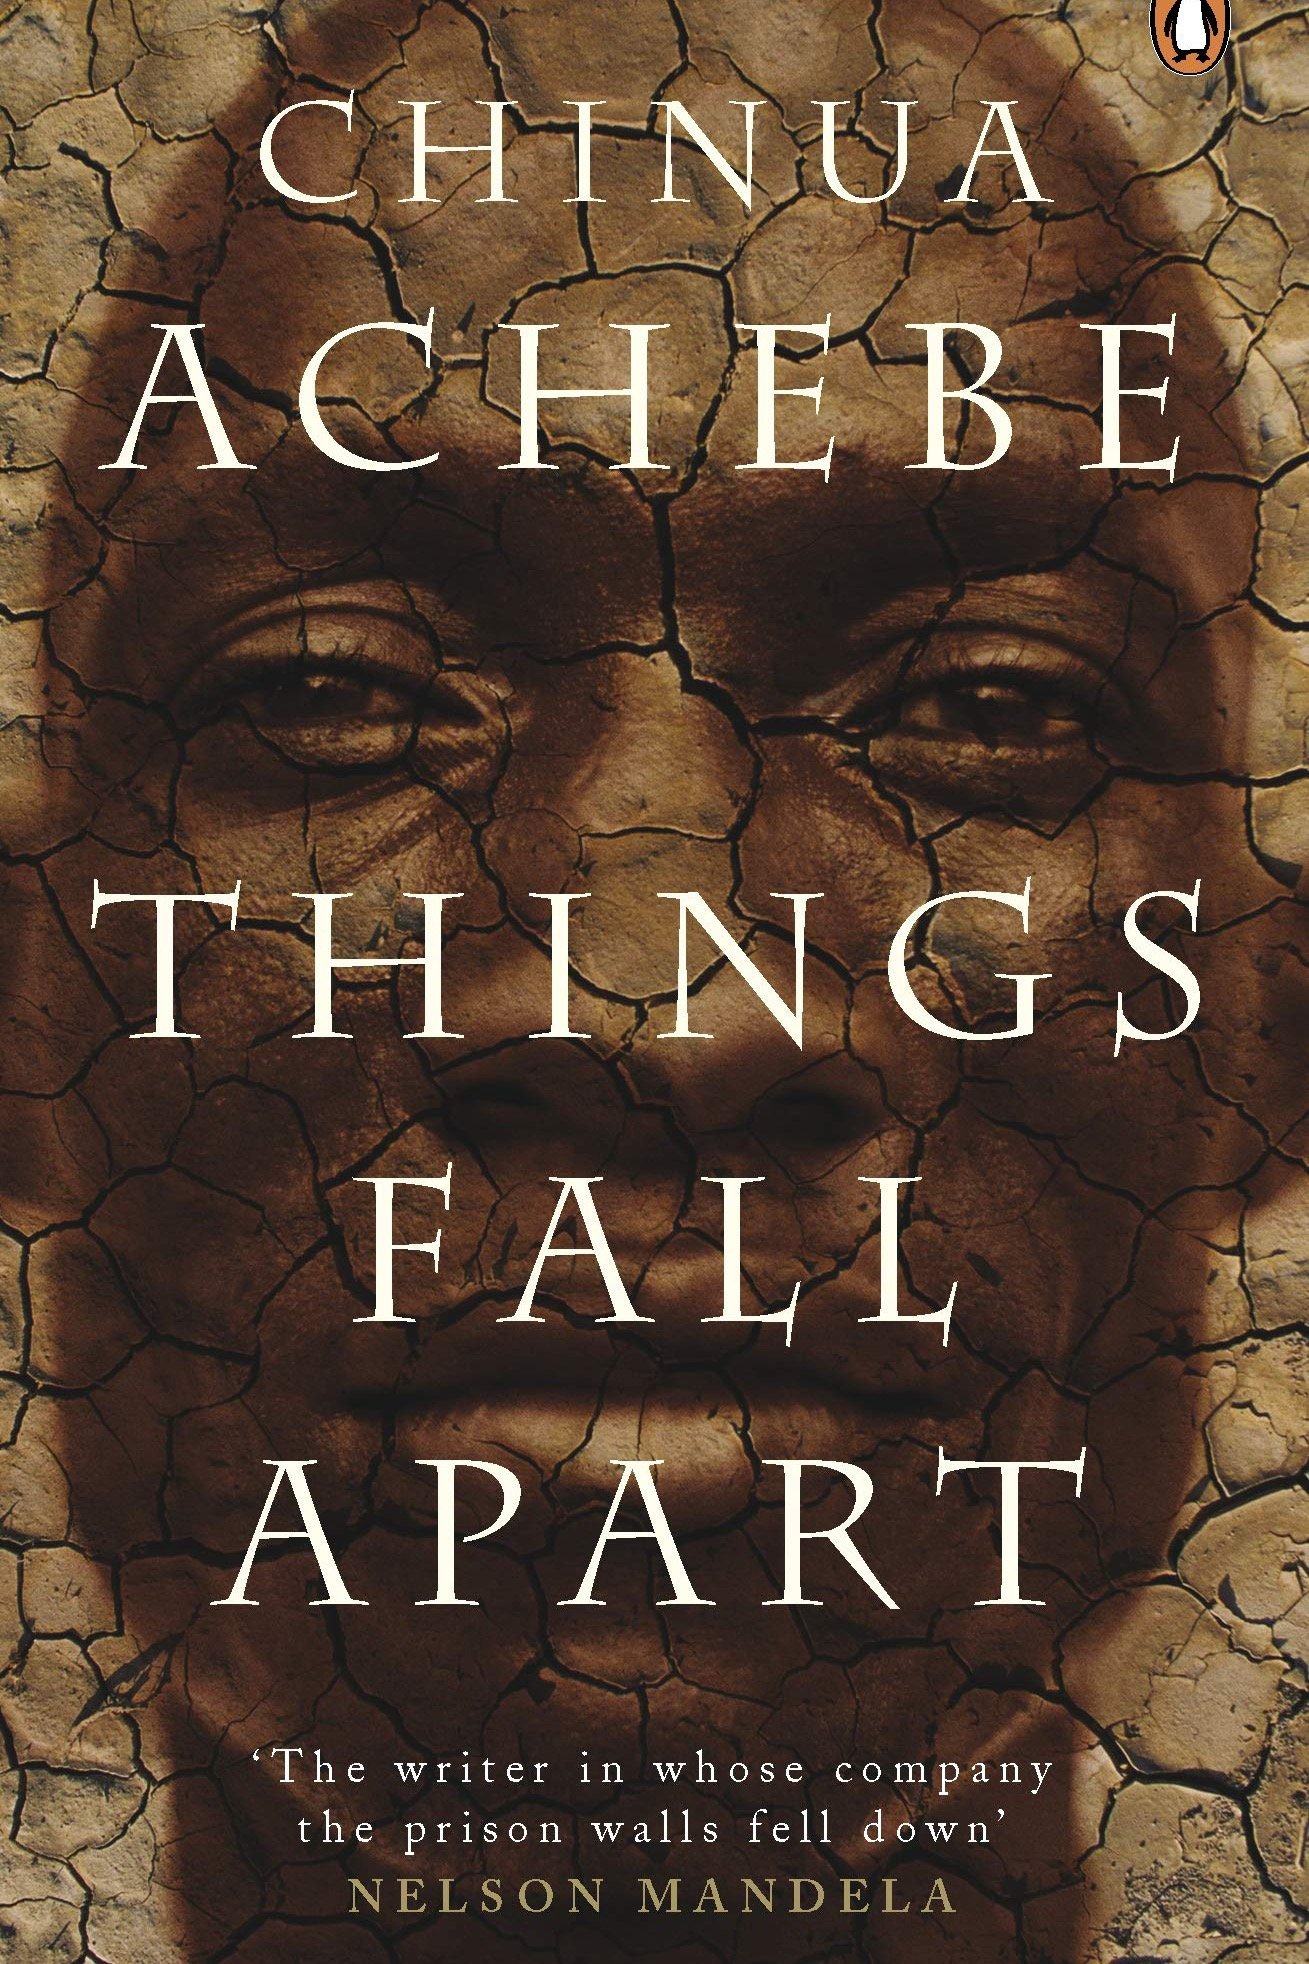 Achebe, Things Fall Apart 2.jpeg